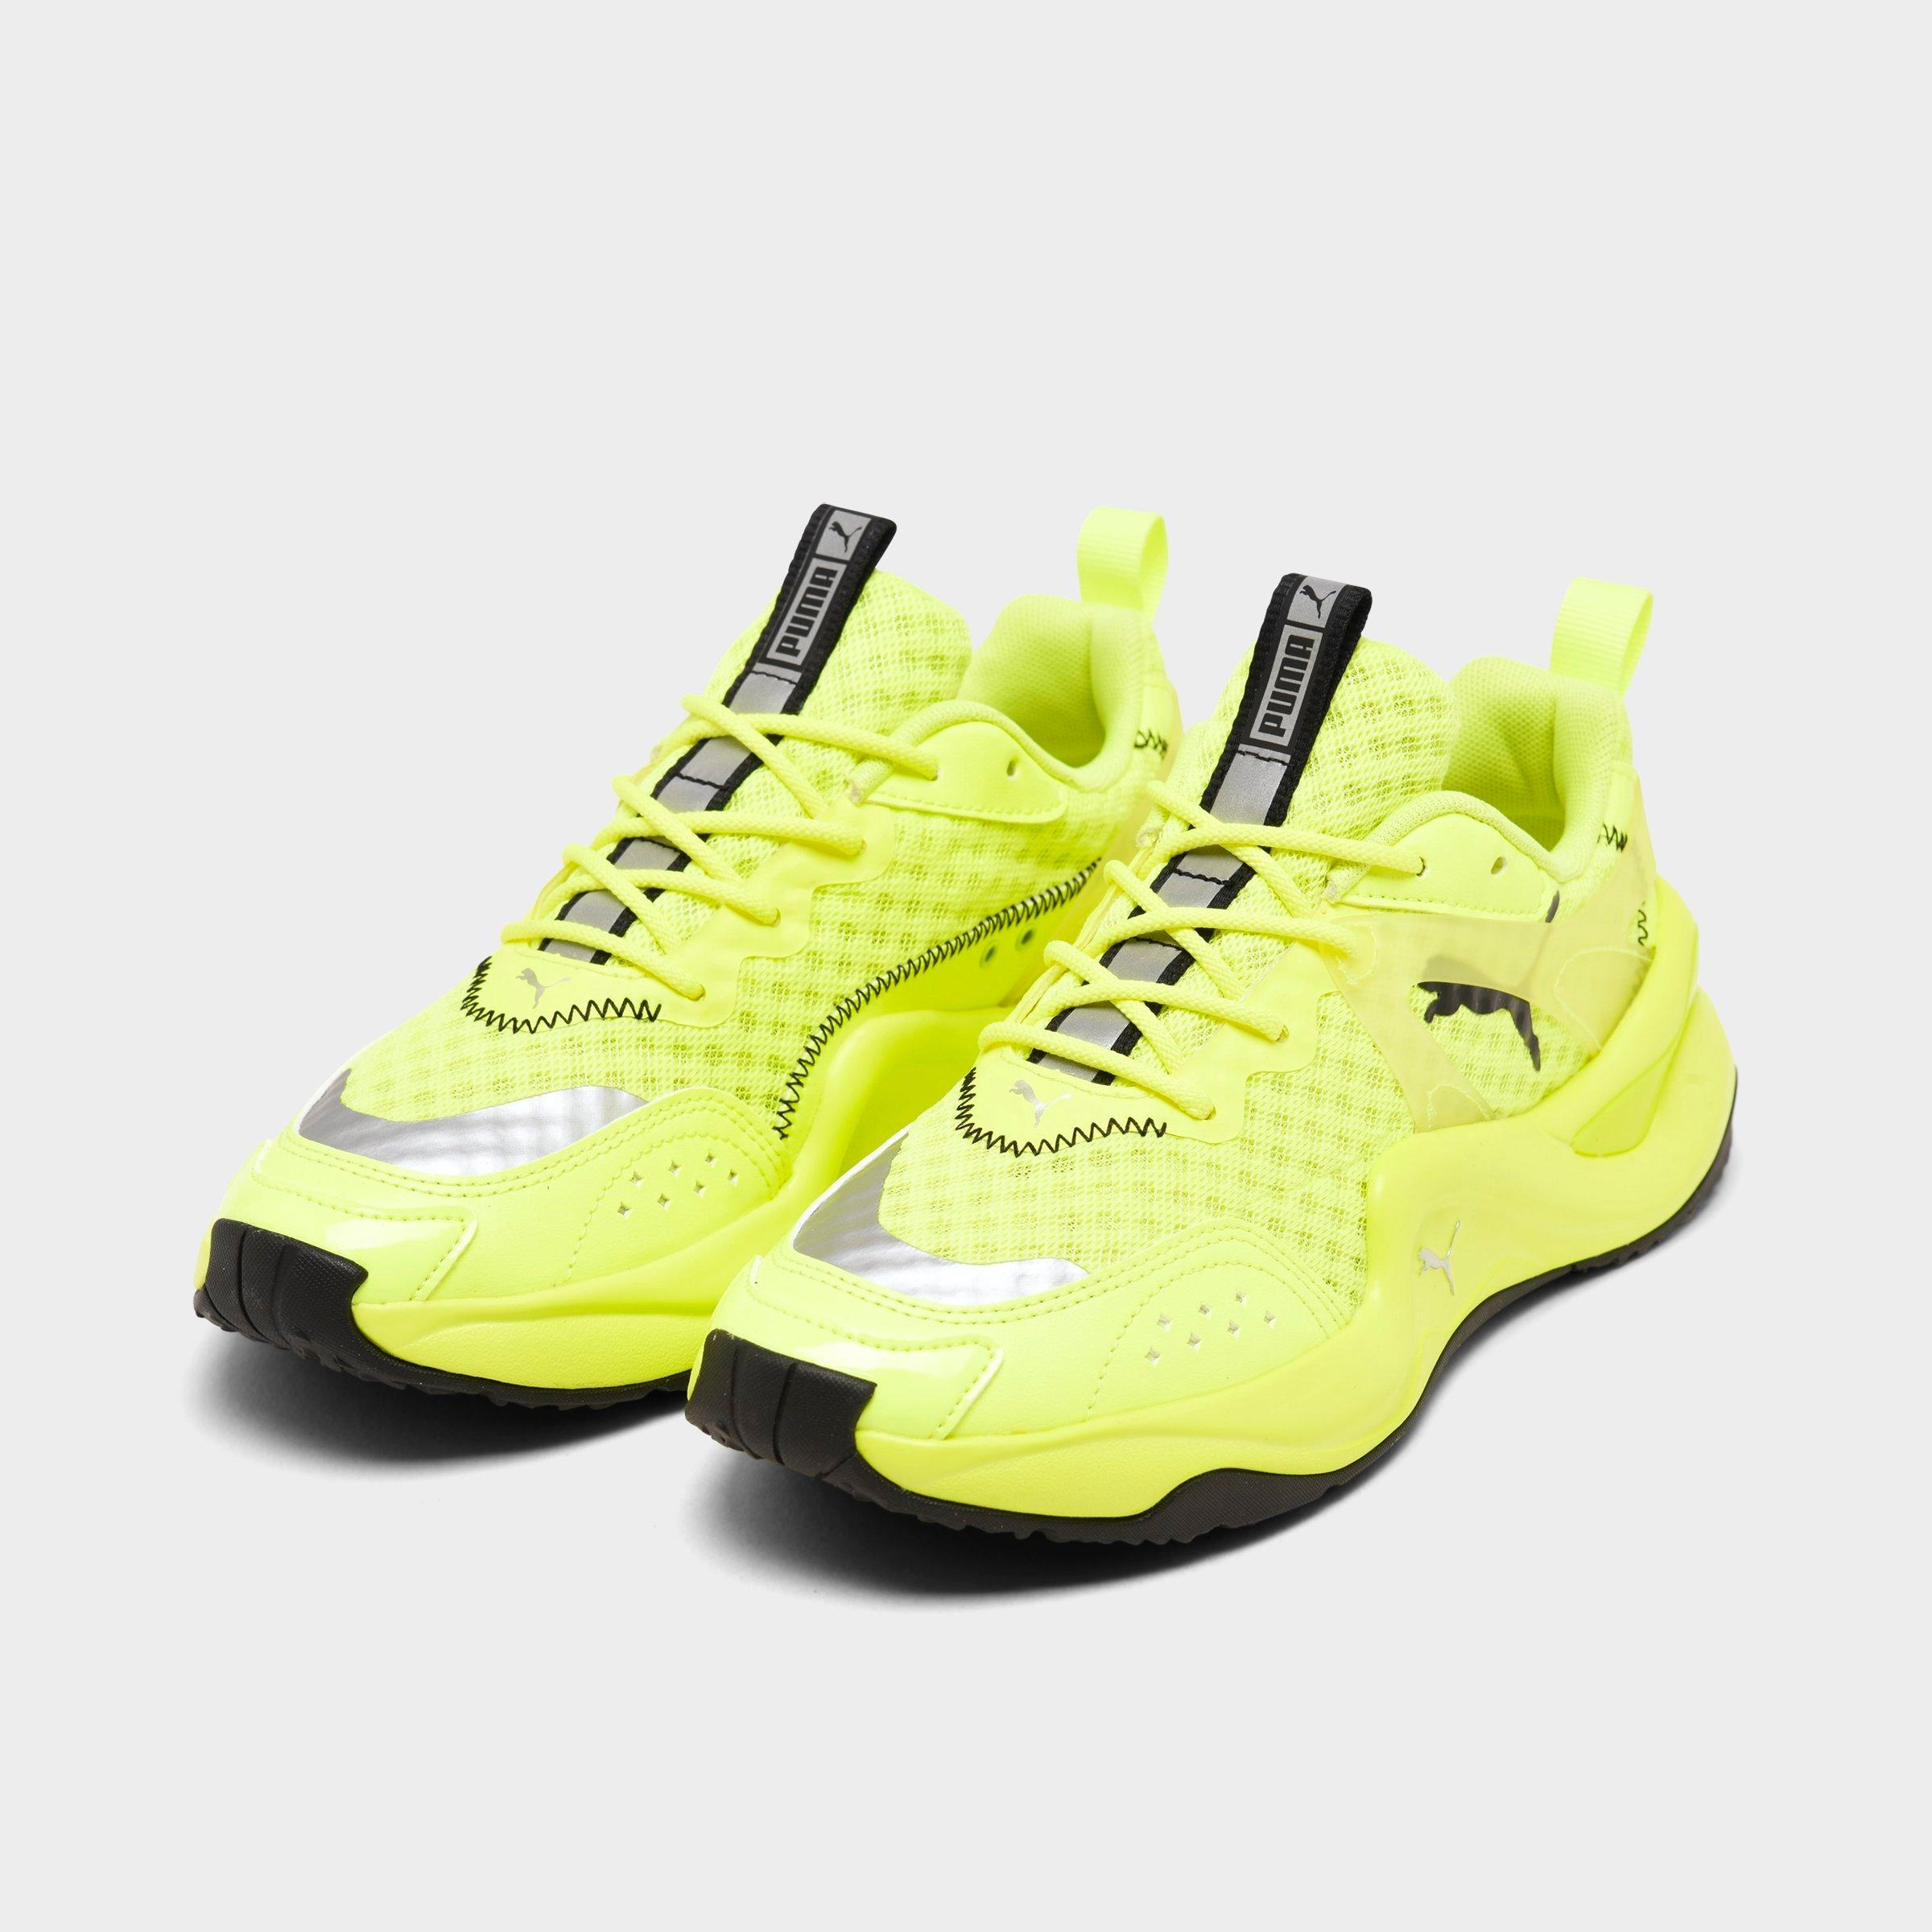 puma neon shoes